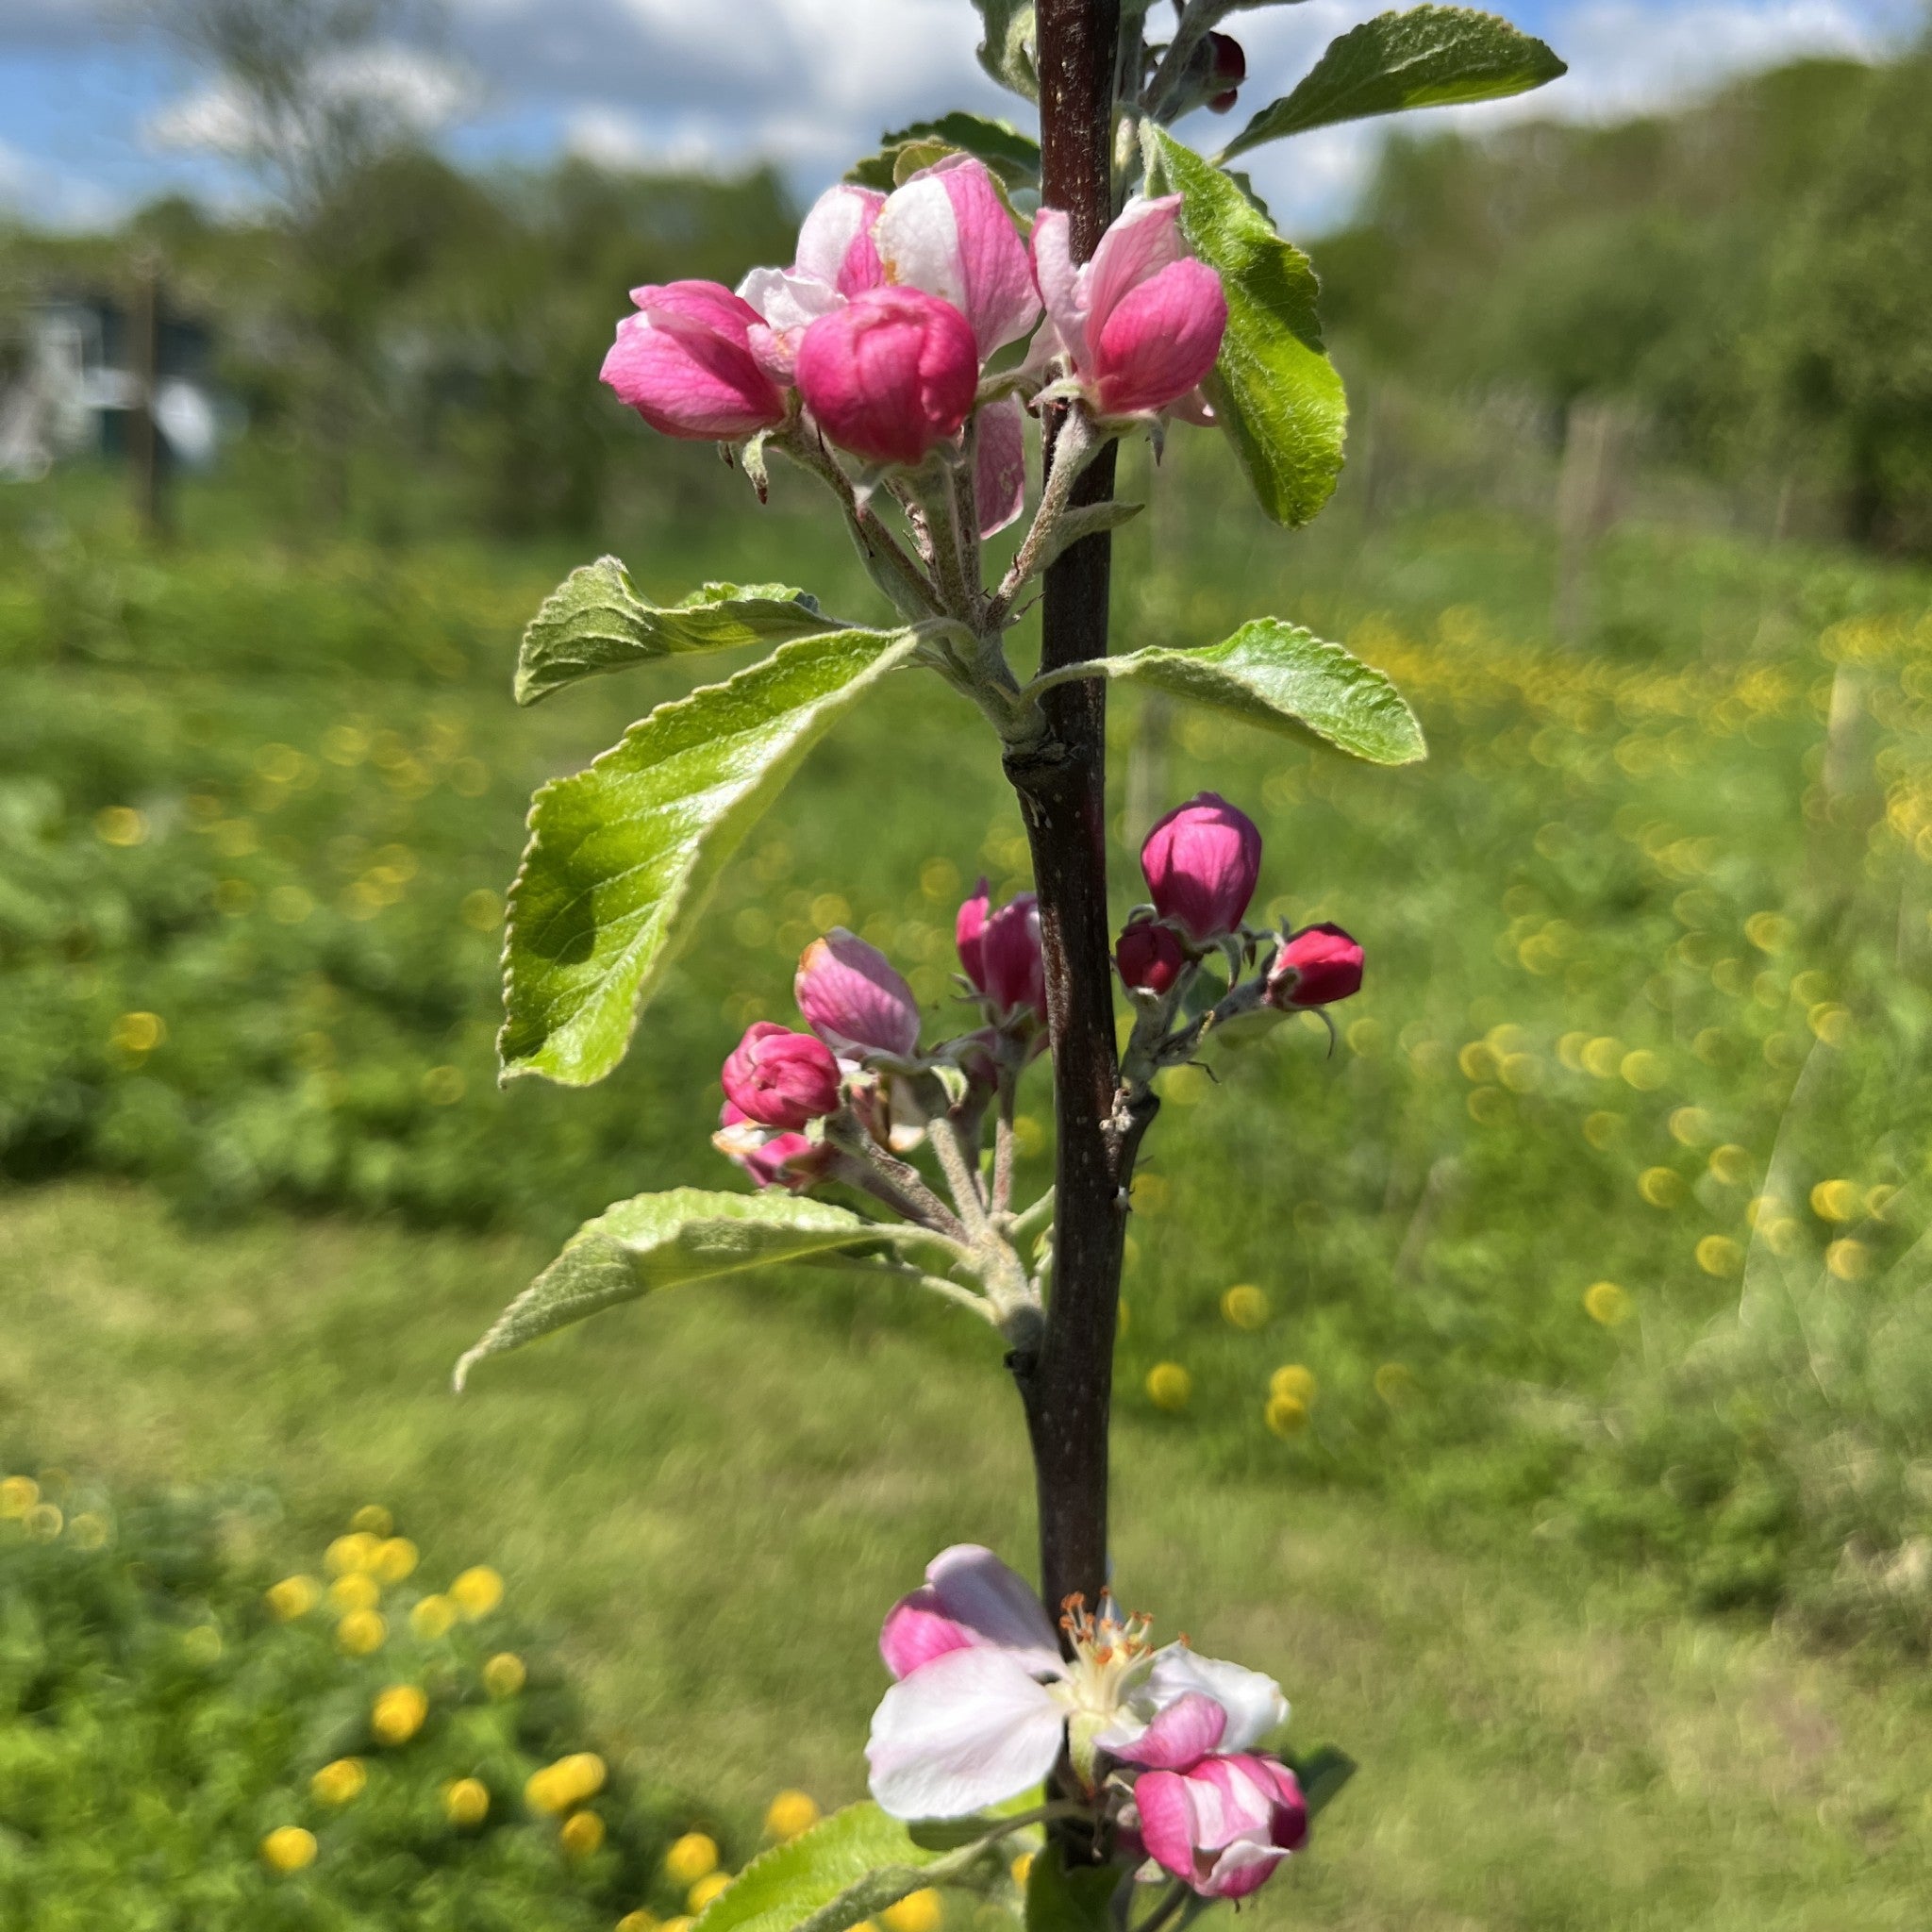 Herefordshire Russet apple tree blossom